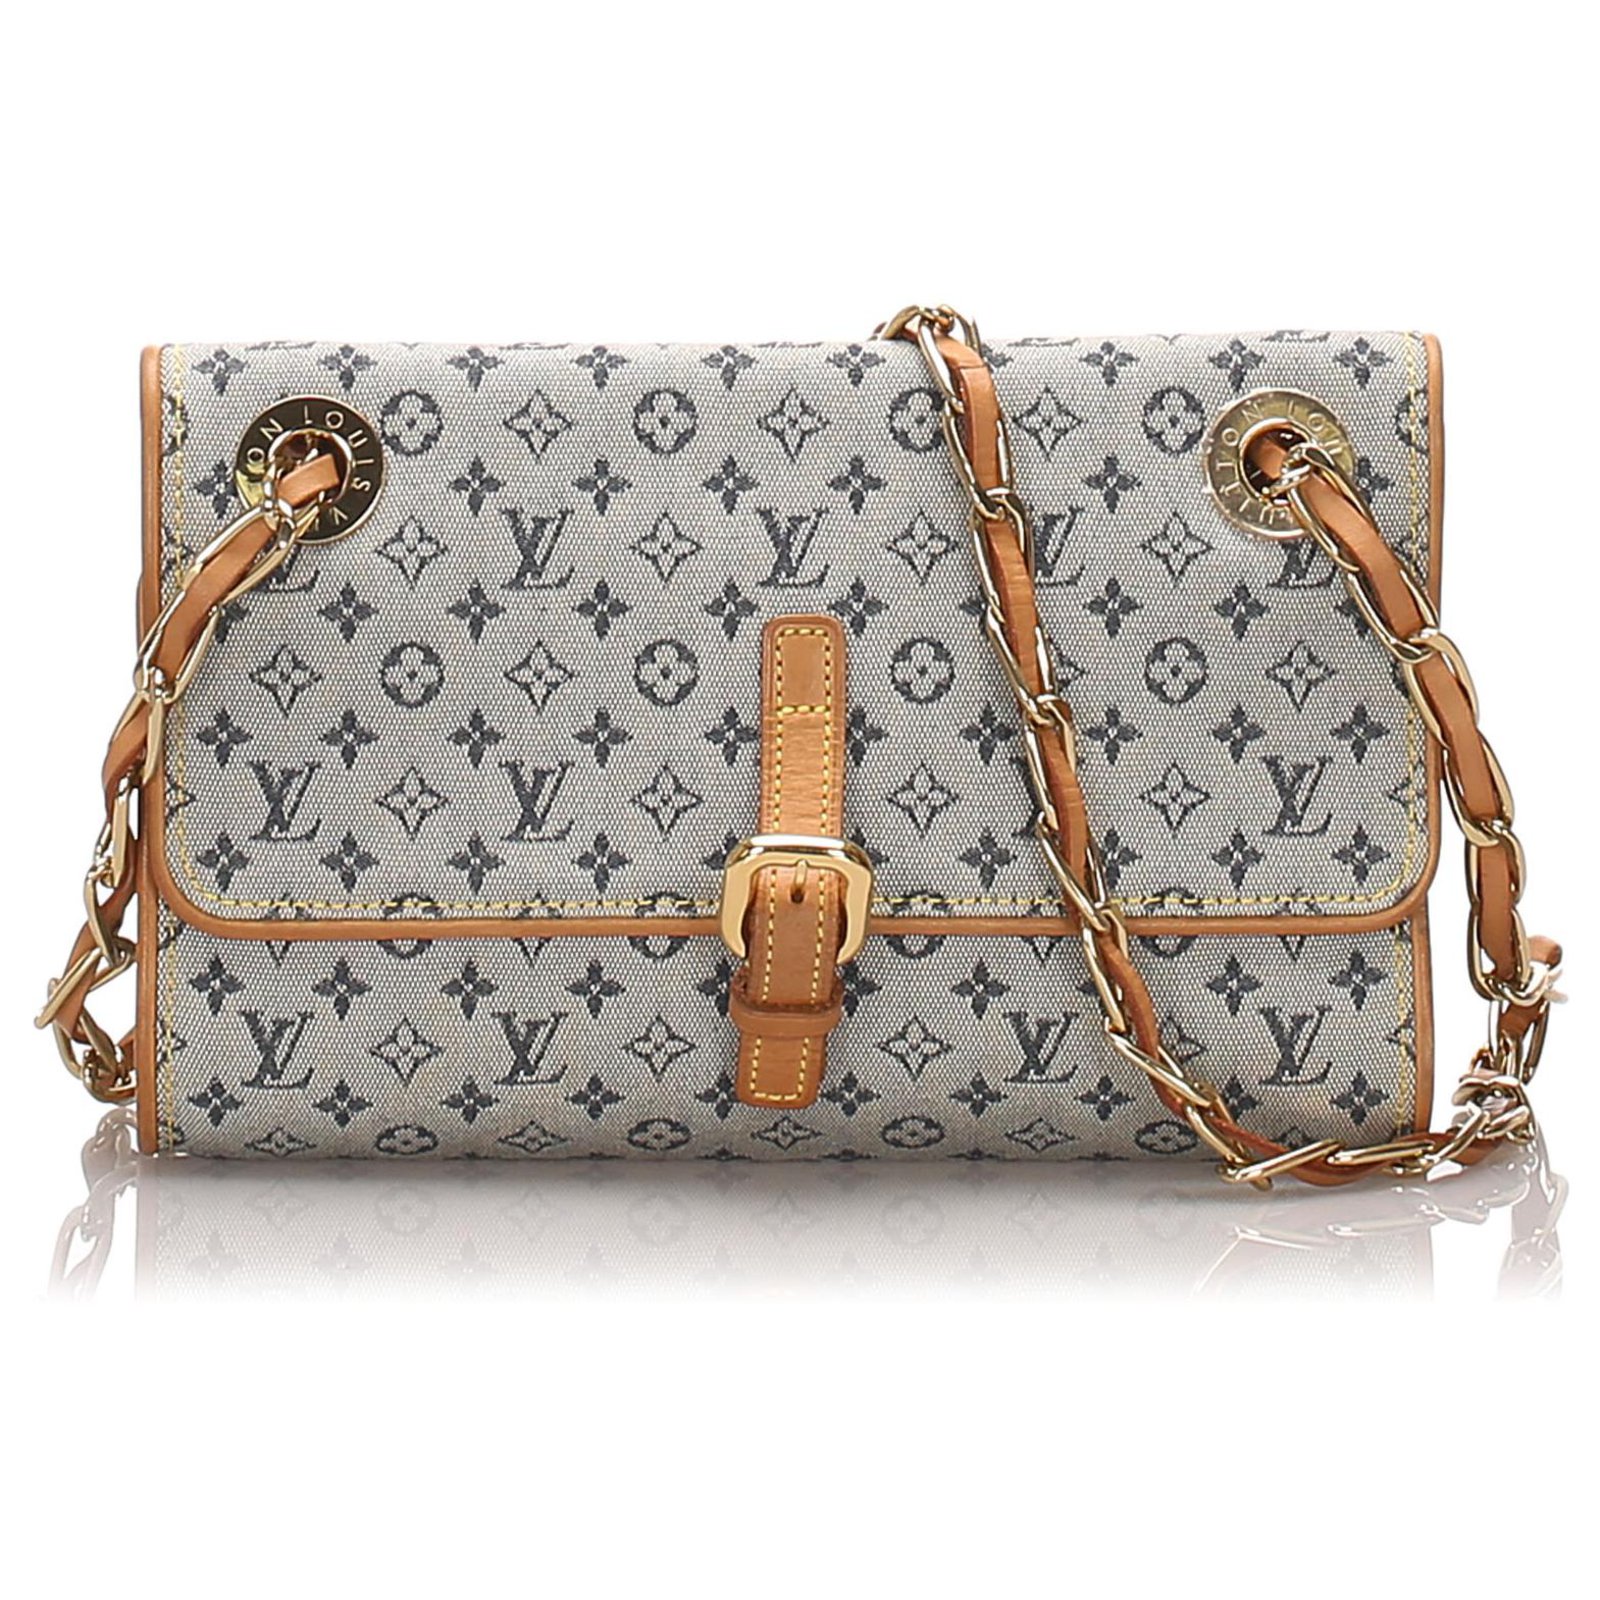 Louis Vuitton mini flap bag in brown monogram canvas with chain